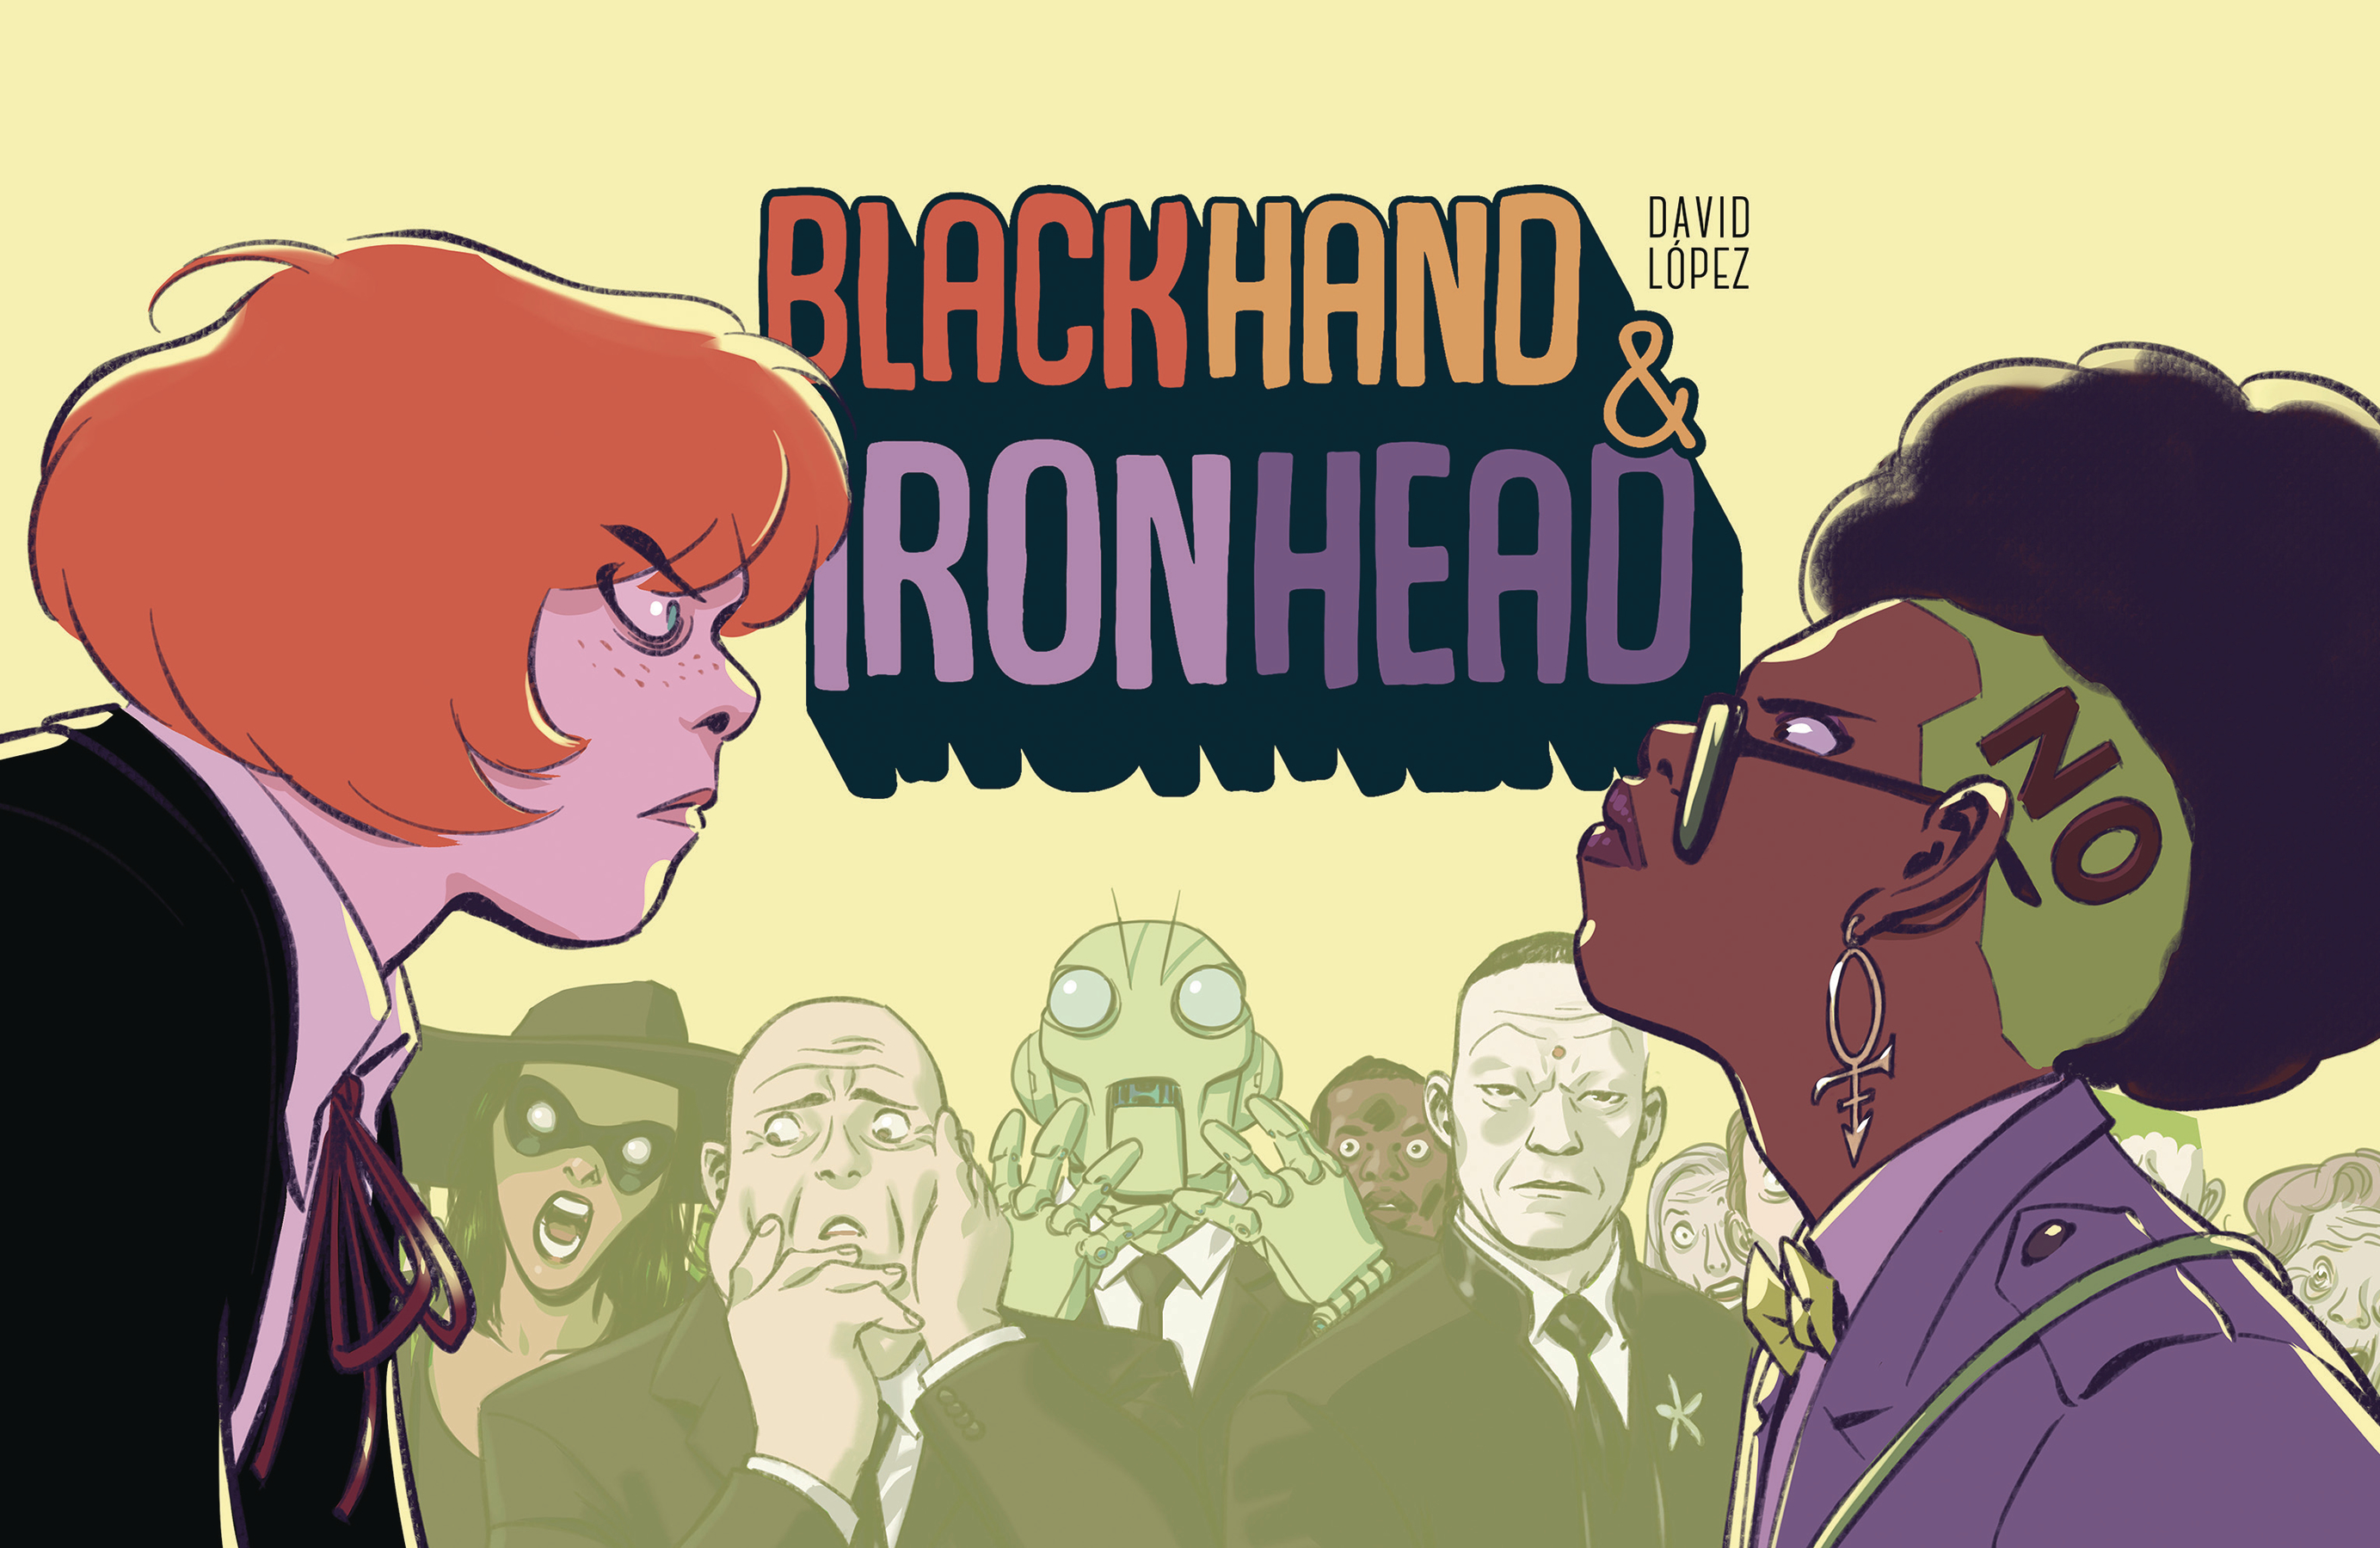 Blackhand & Ironhead Hardcover Volume 1